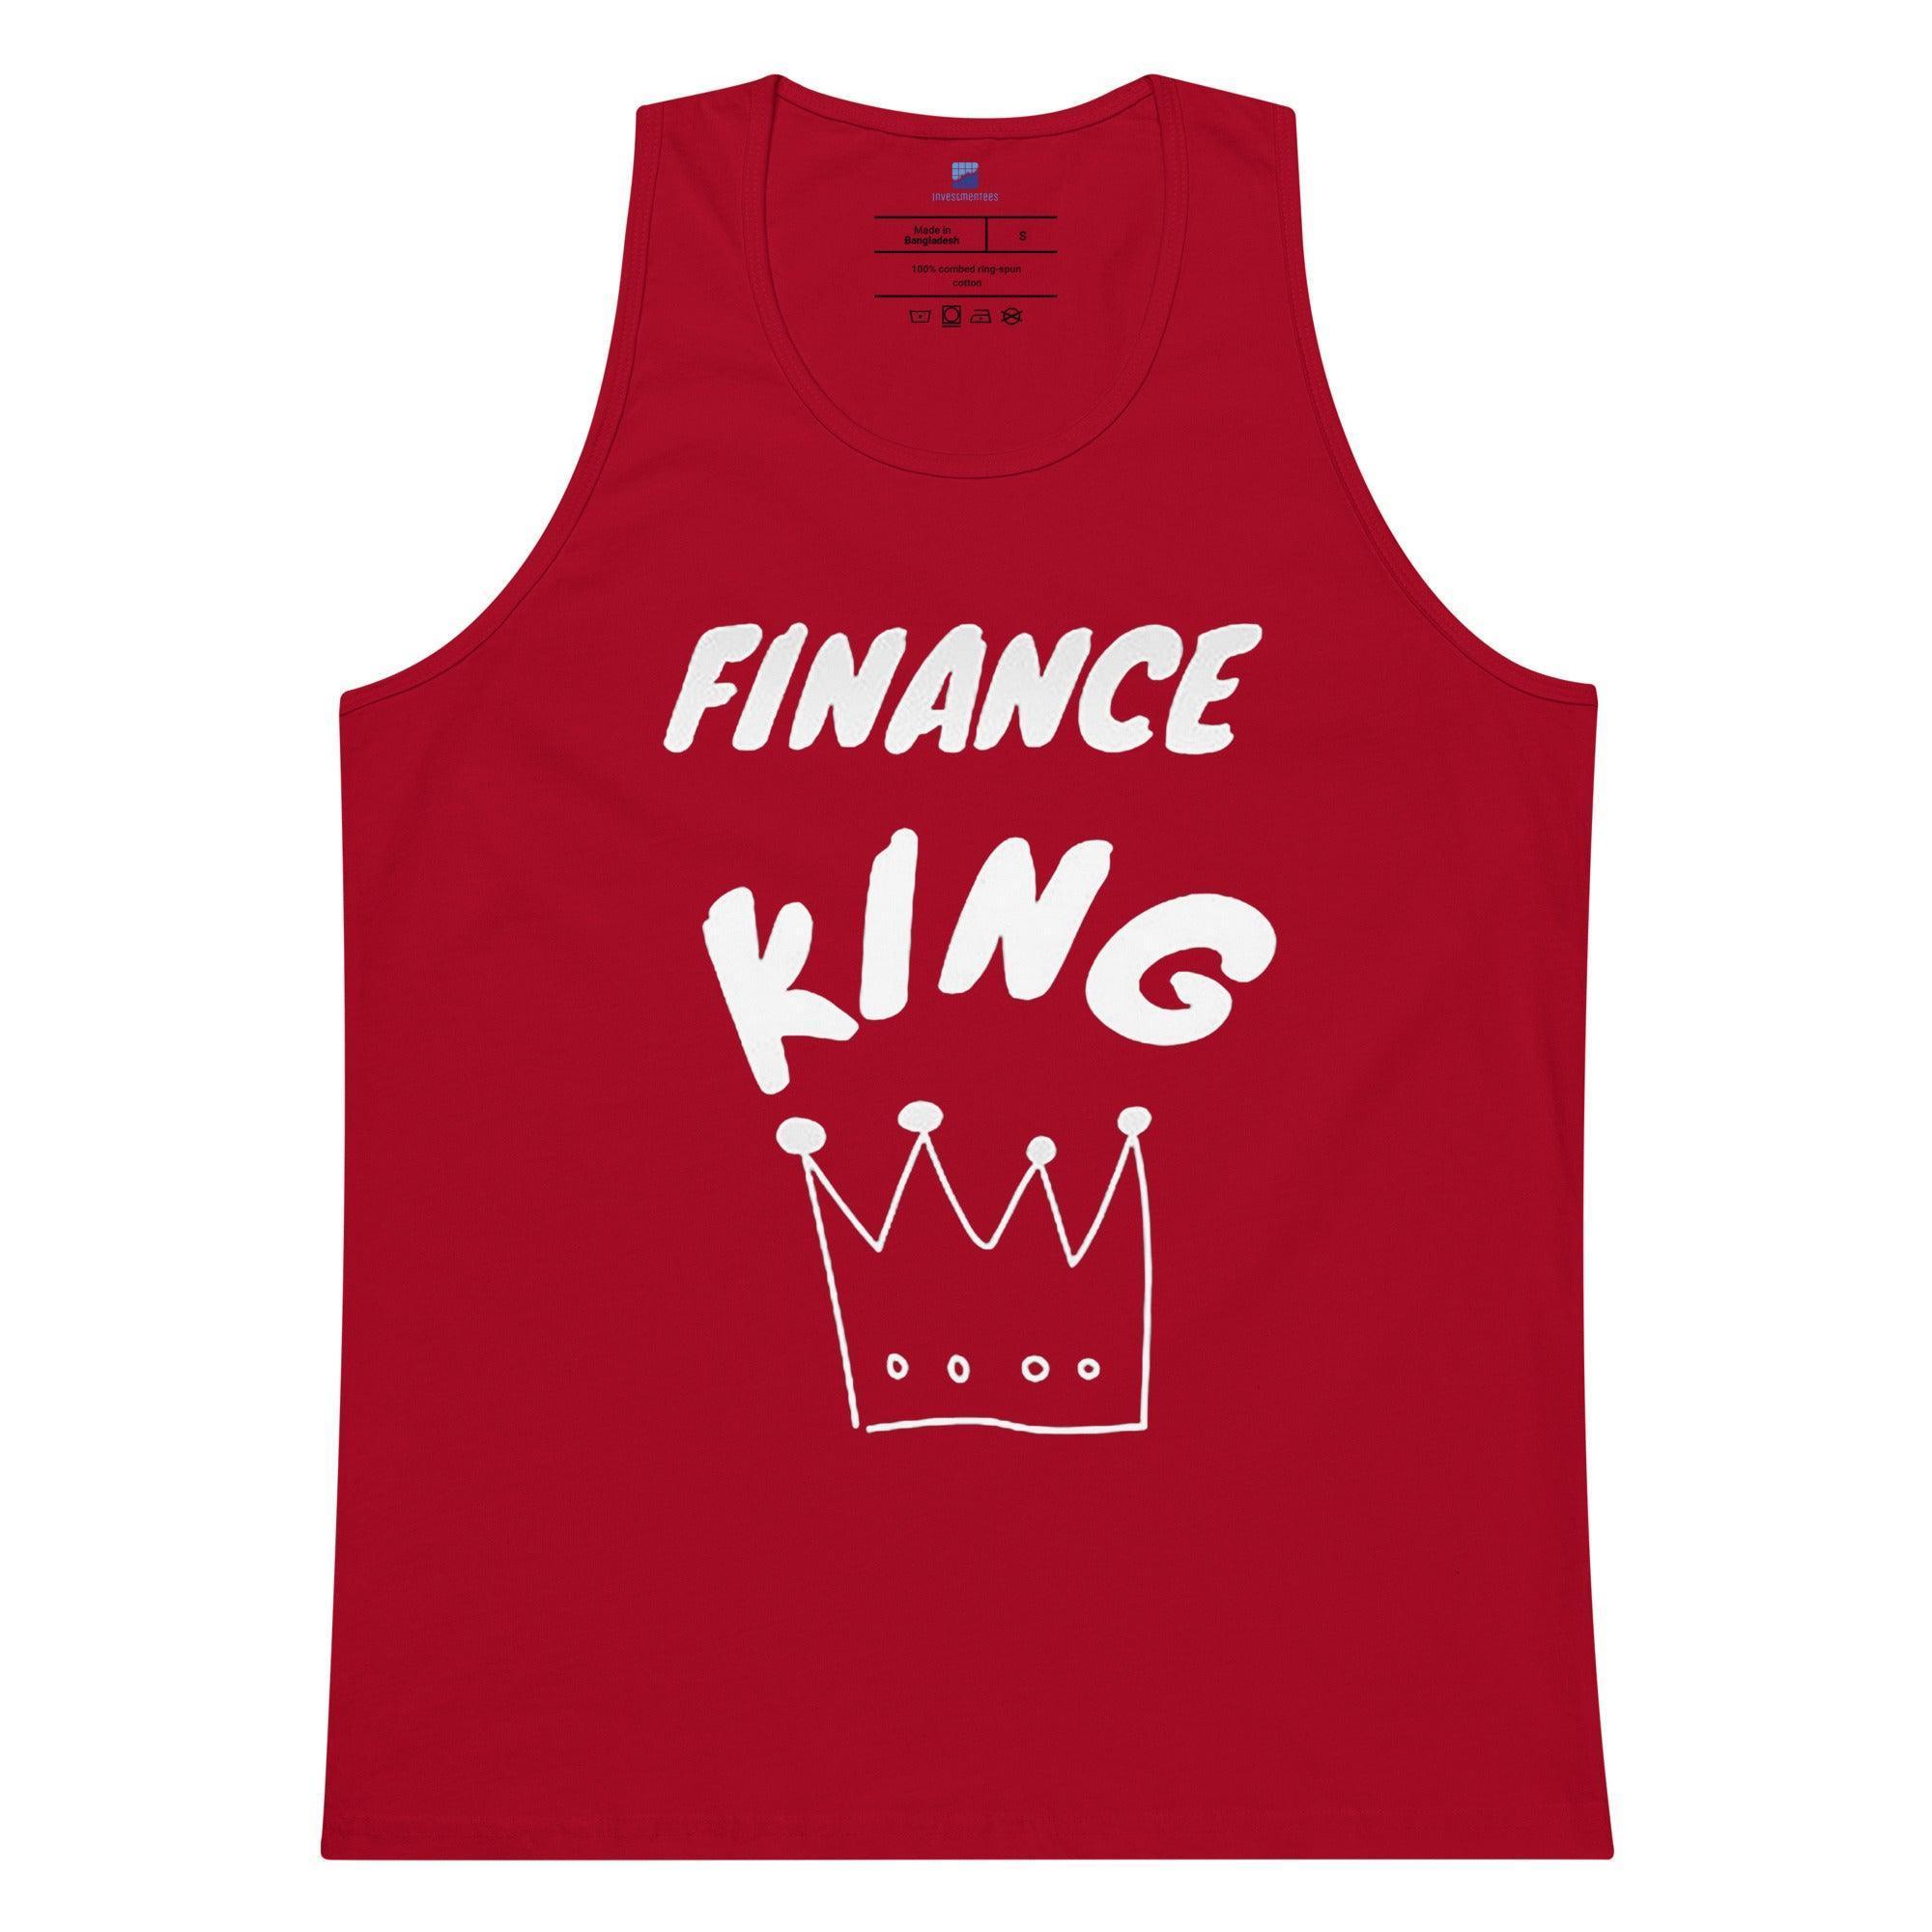 Finance King Tank Top - InvestmenTees